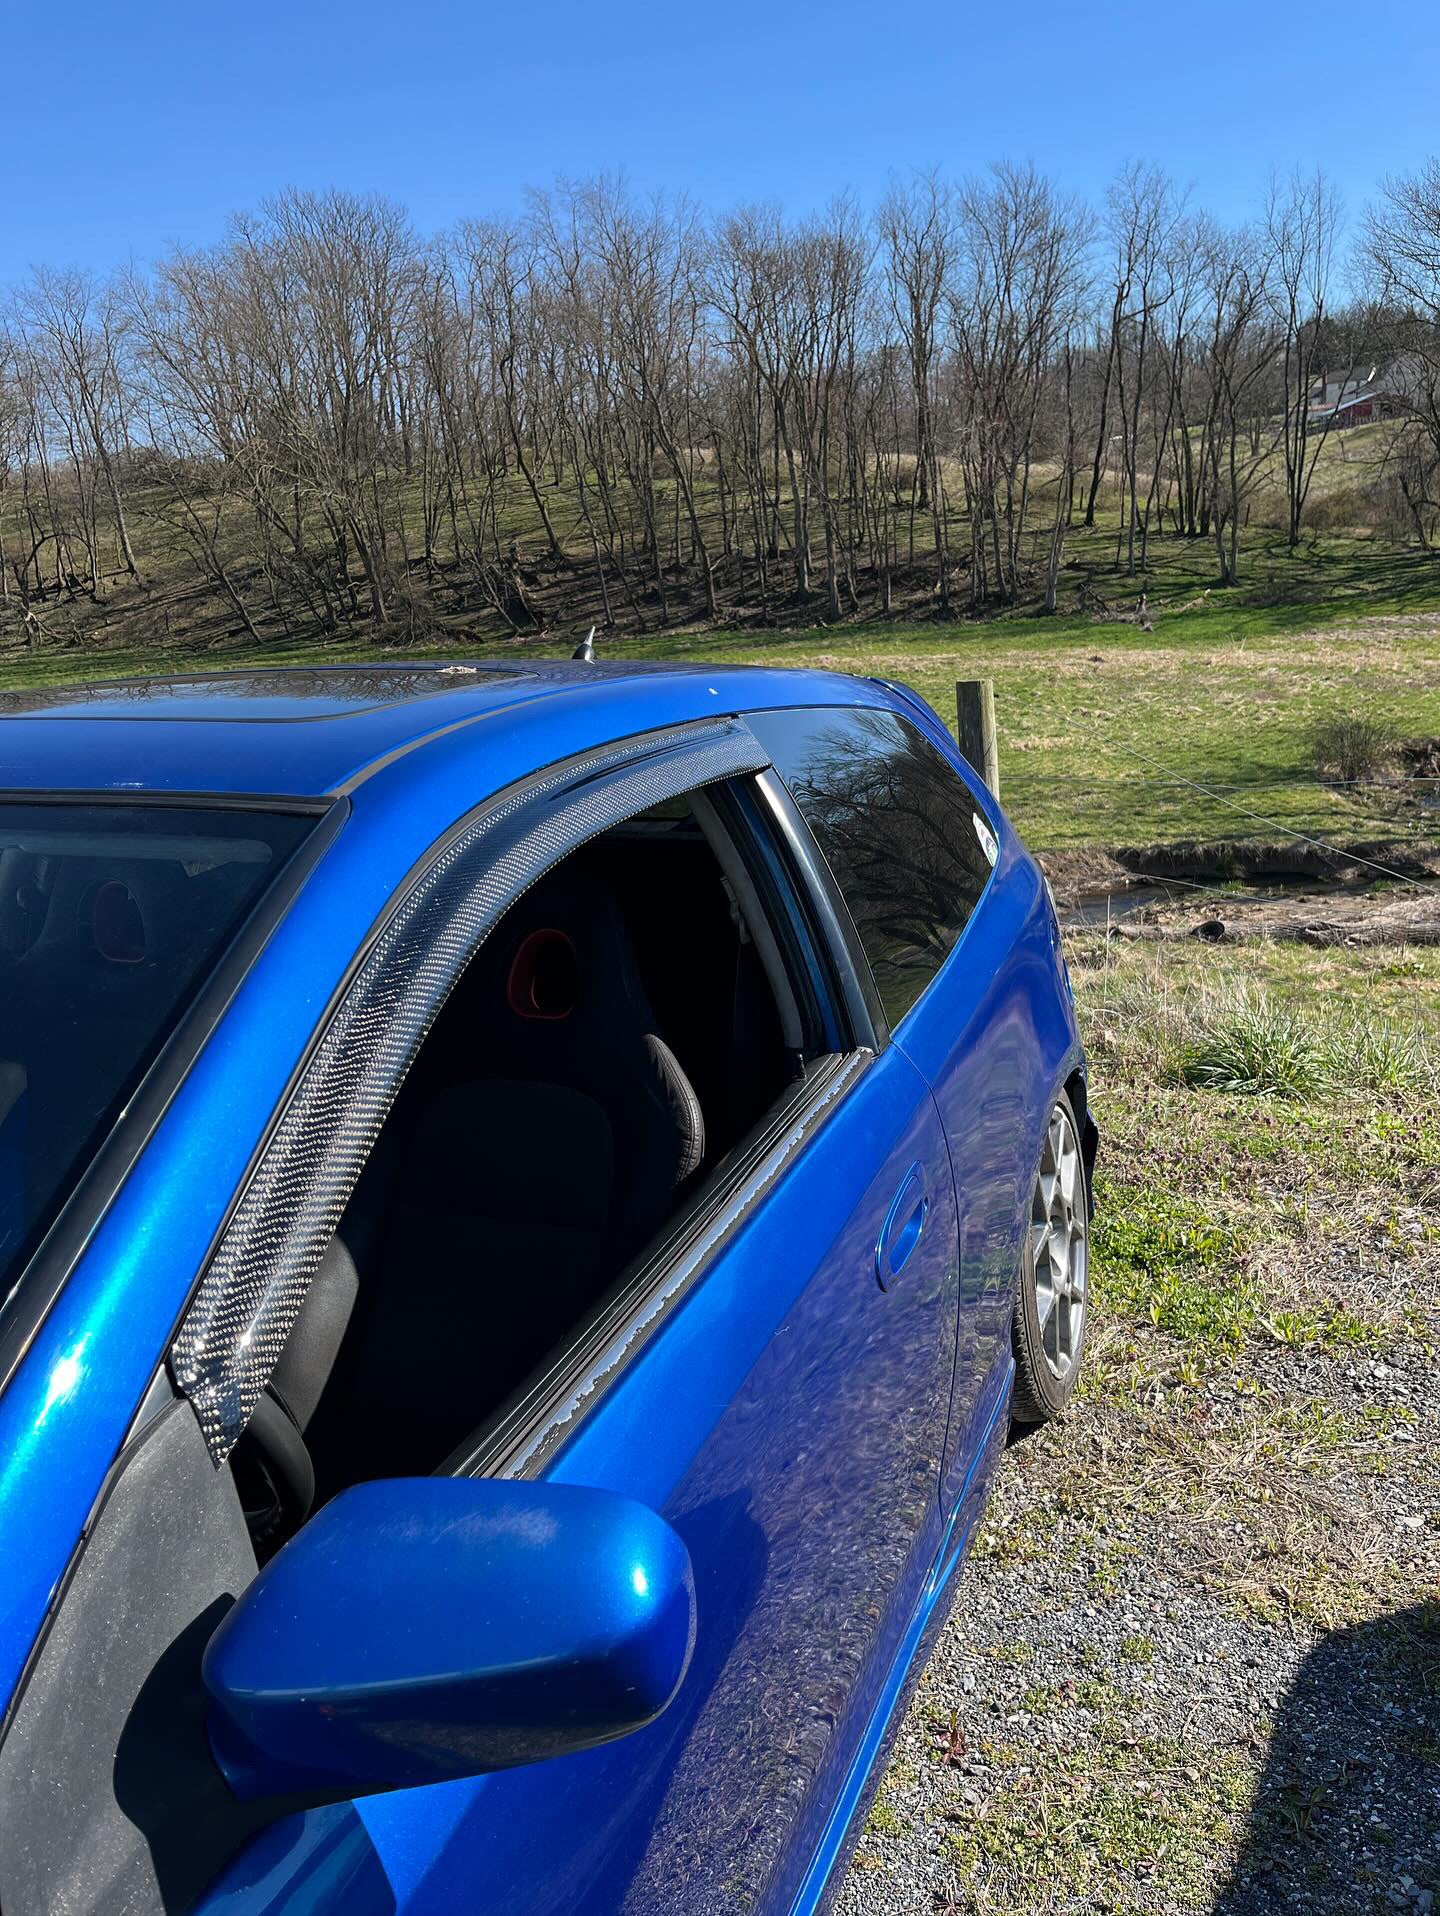 Honda Ep3 Window Visors